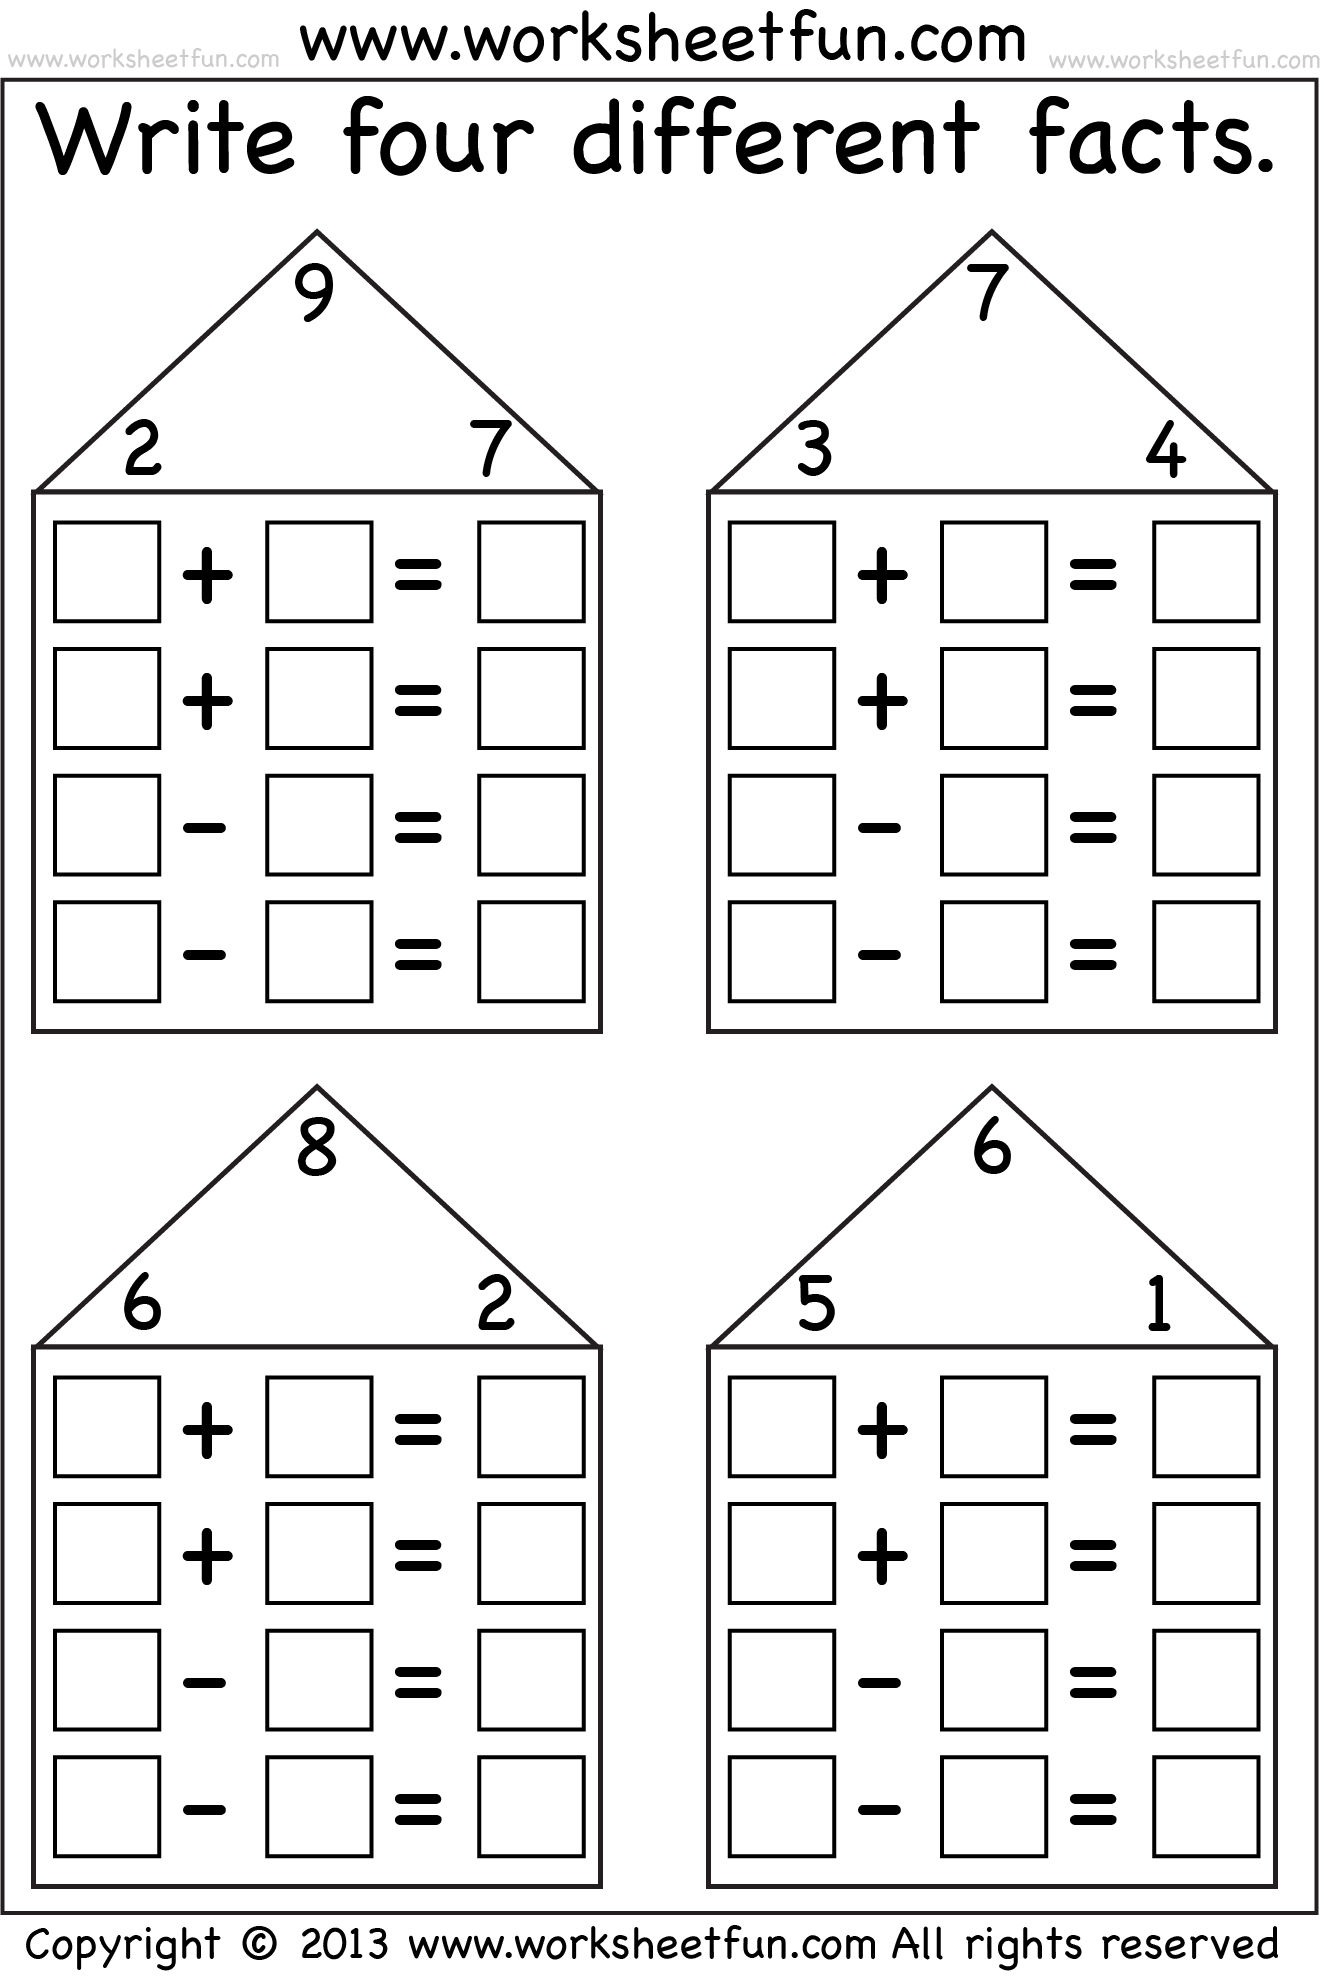 multiplication-fact-families-worksheet